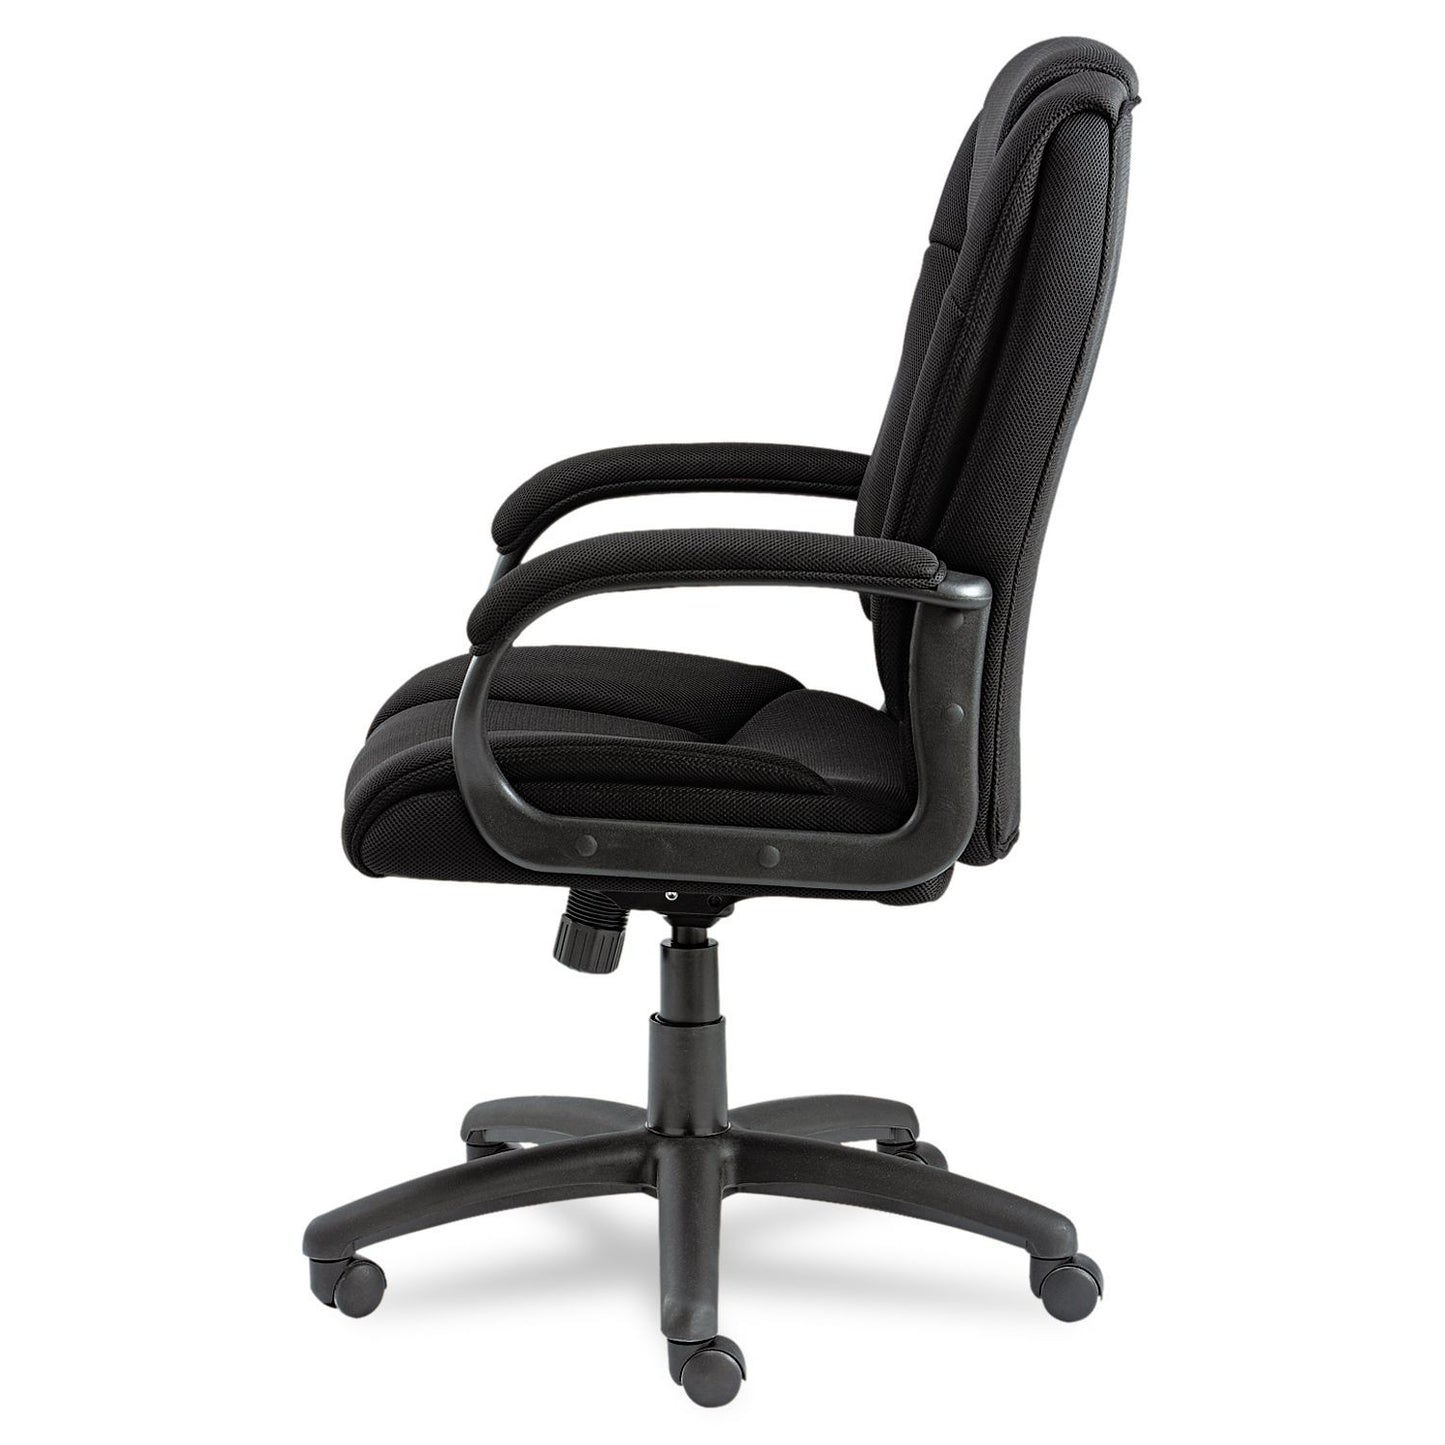 Alera Logan Series Mesh High-Back Swivel/Tilt Chair, Black